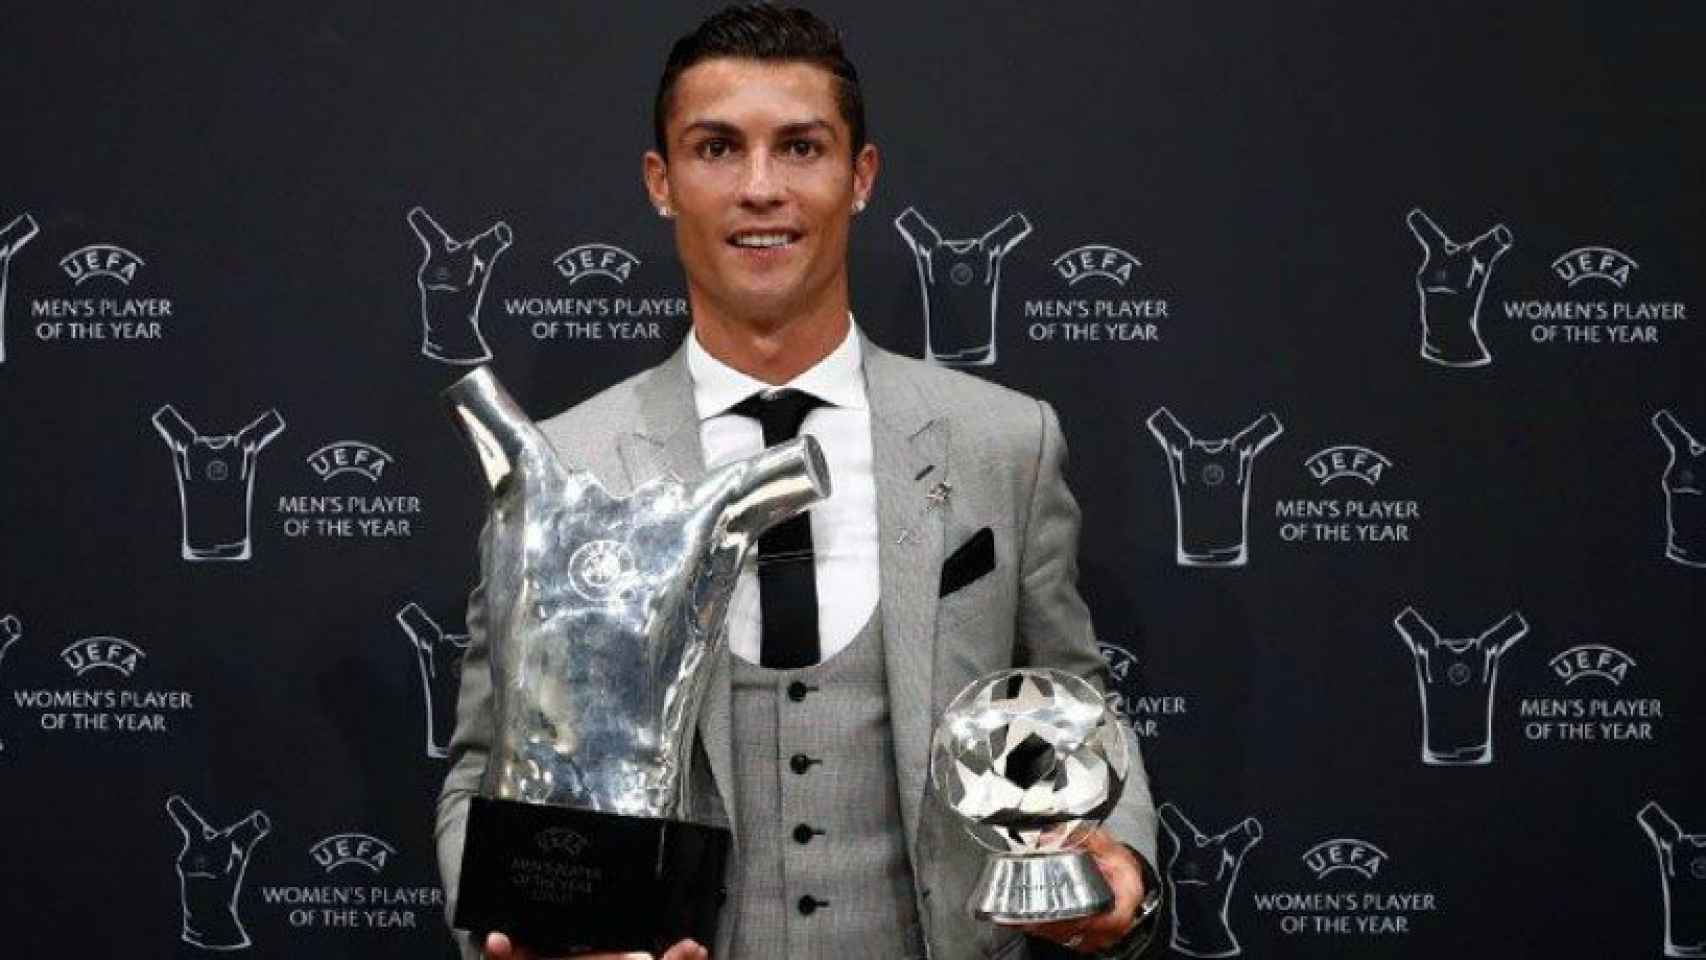 Cristiano posando con sus trofeos.